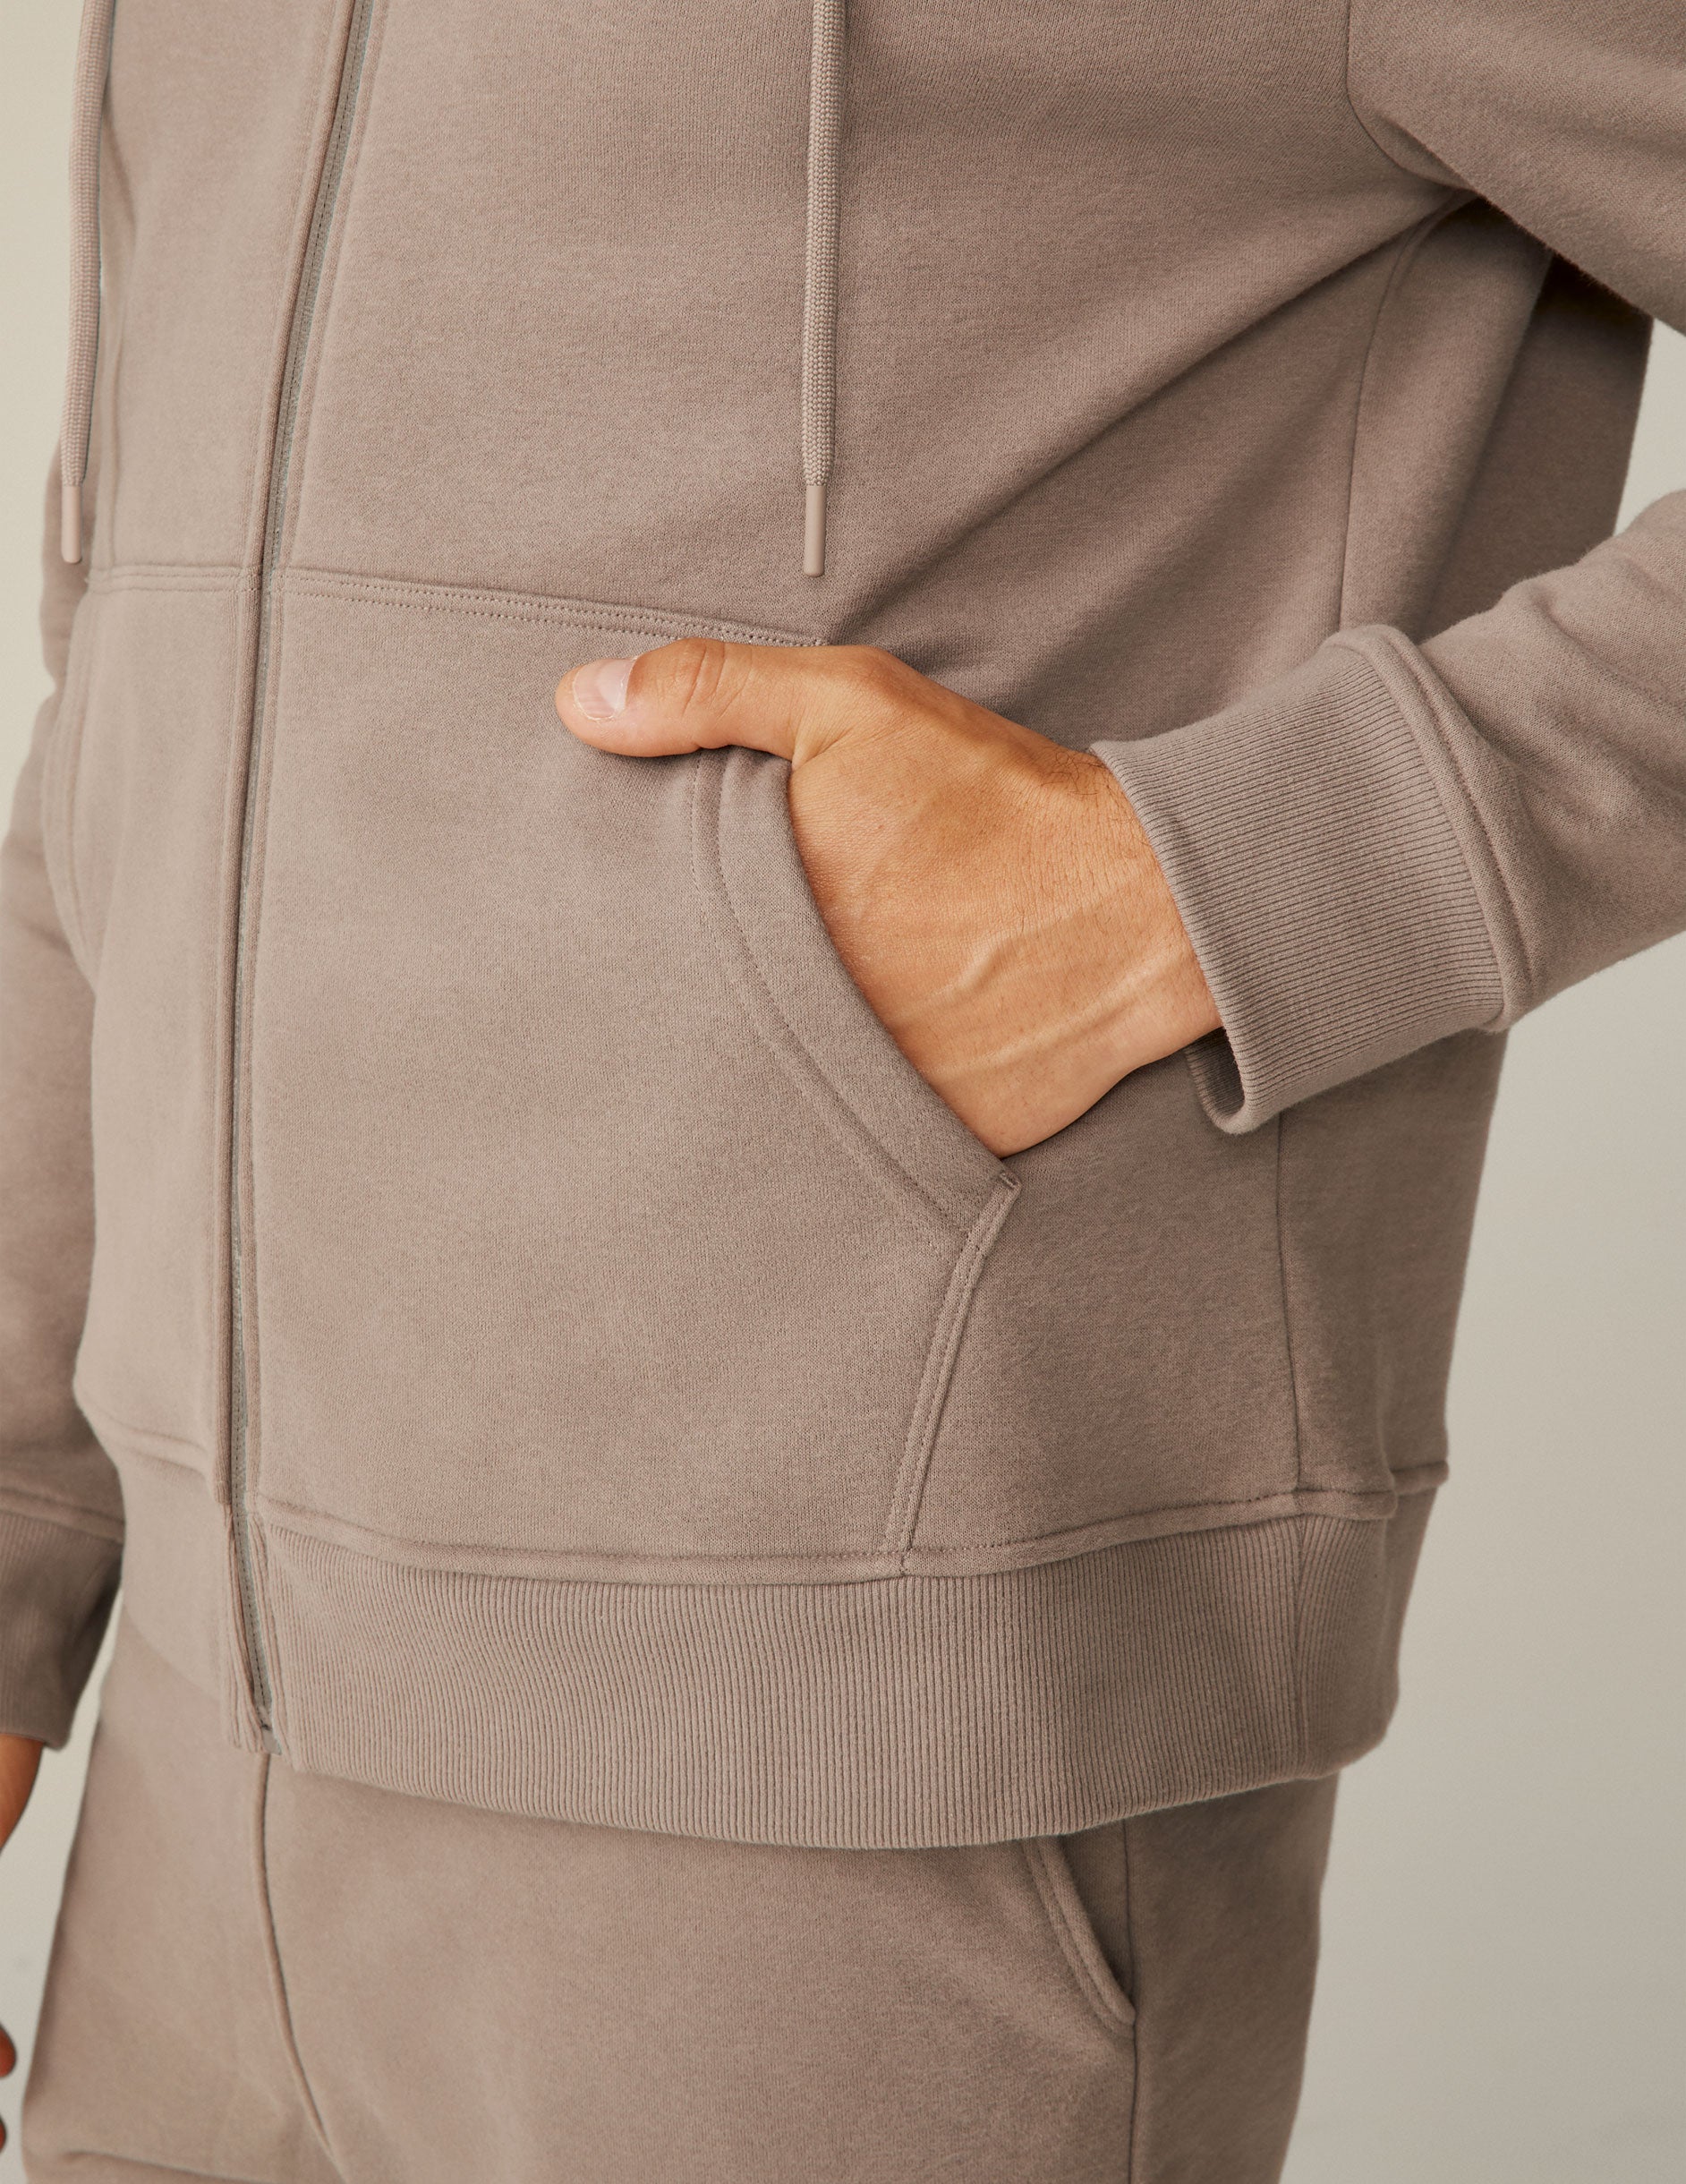 model is wearing a brown men's zip-up hooded jacket.